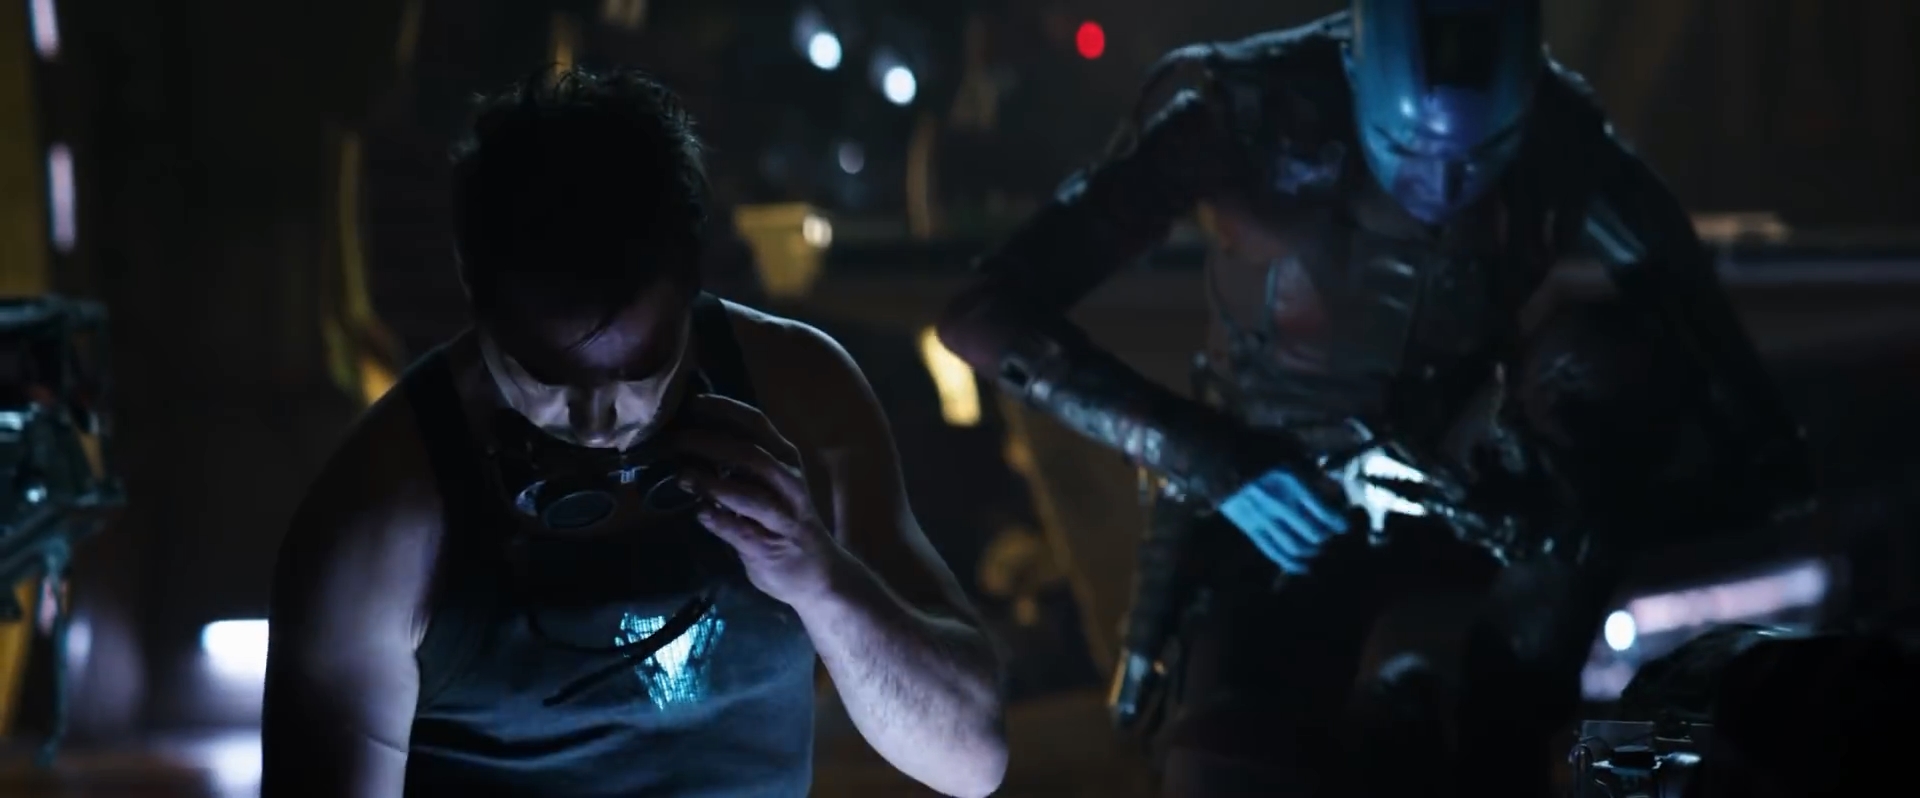 Avengers Endgame Super Bowl Spot - Tony Stark Nebula Mark I Mode